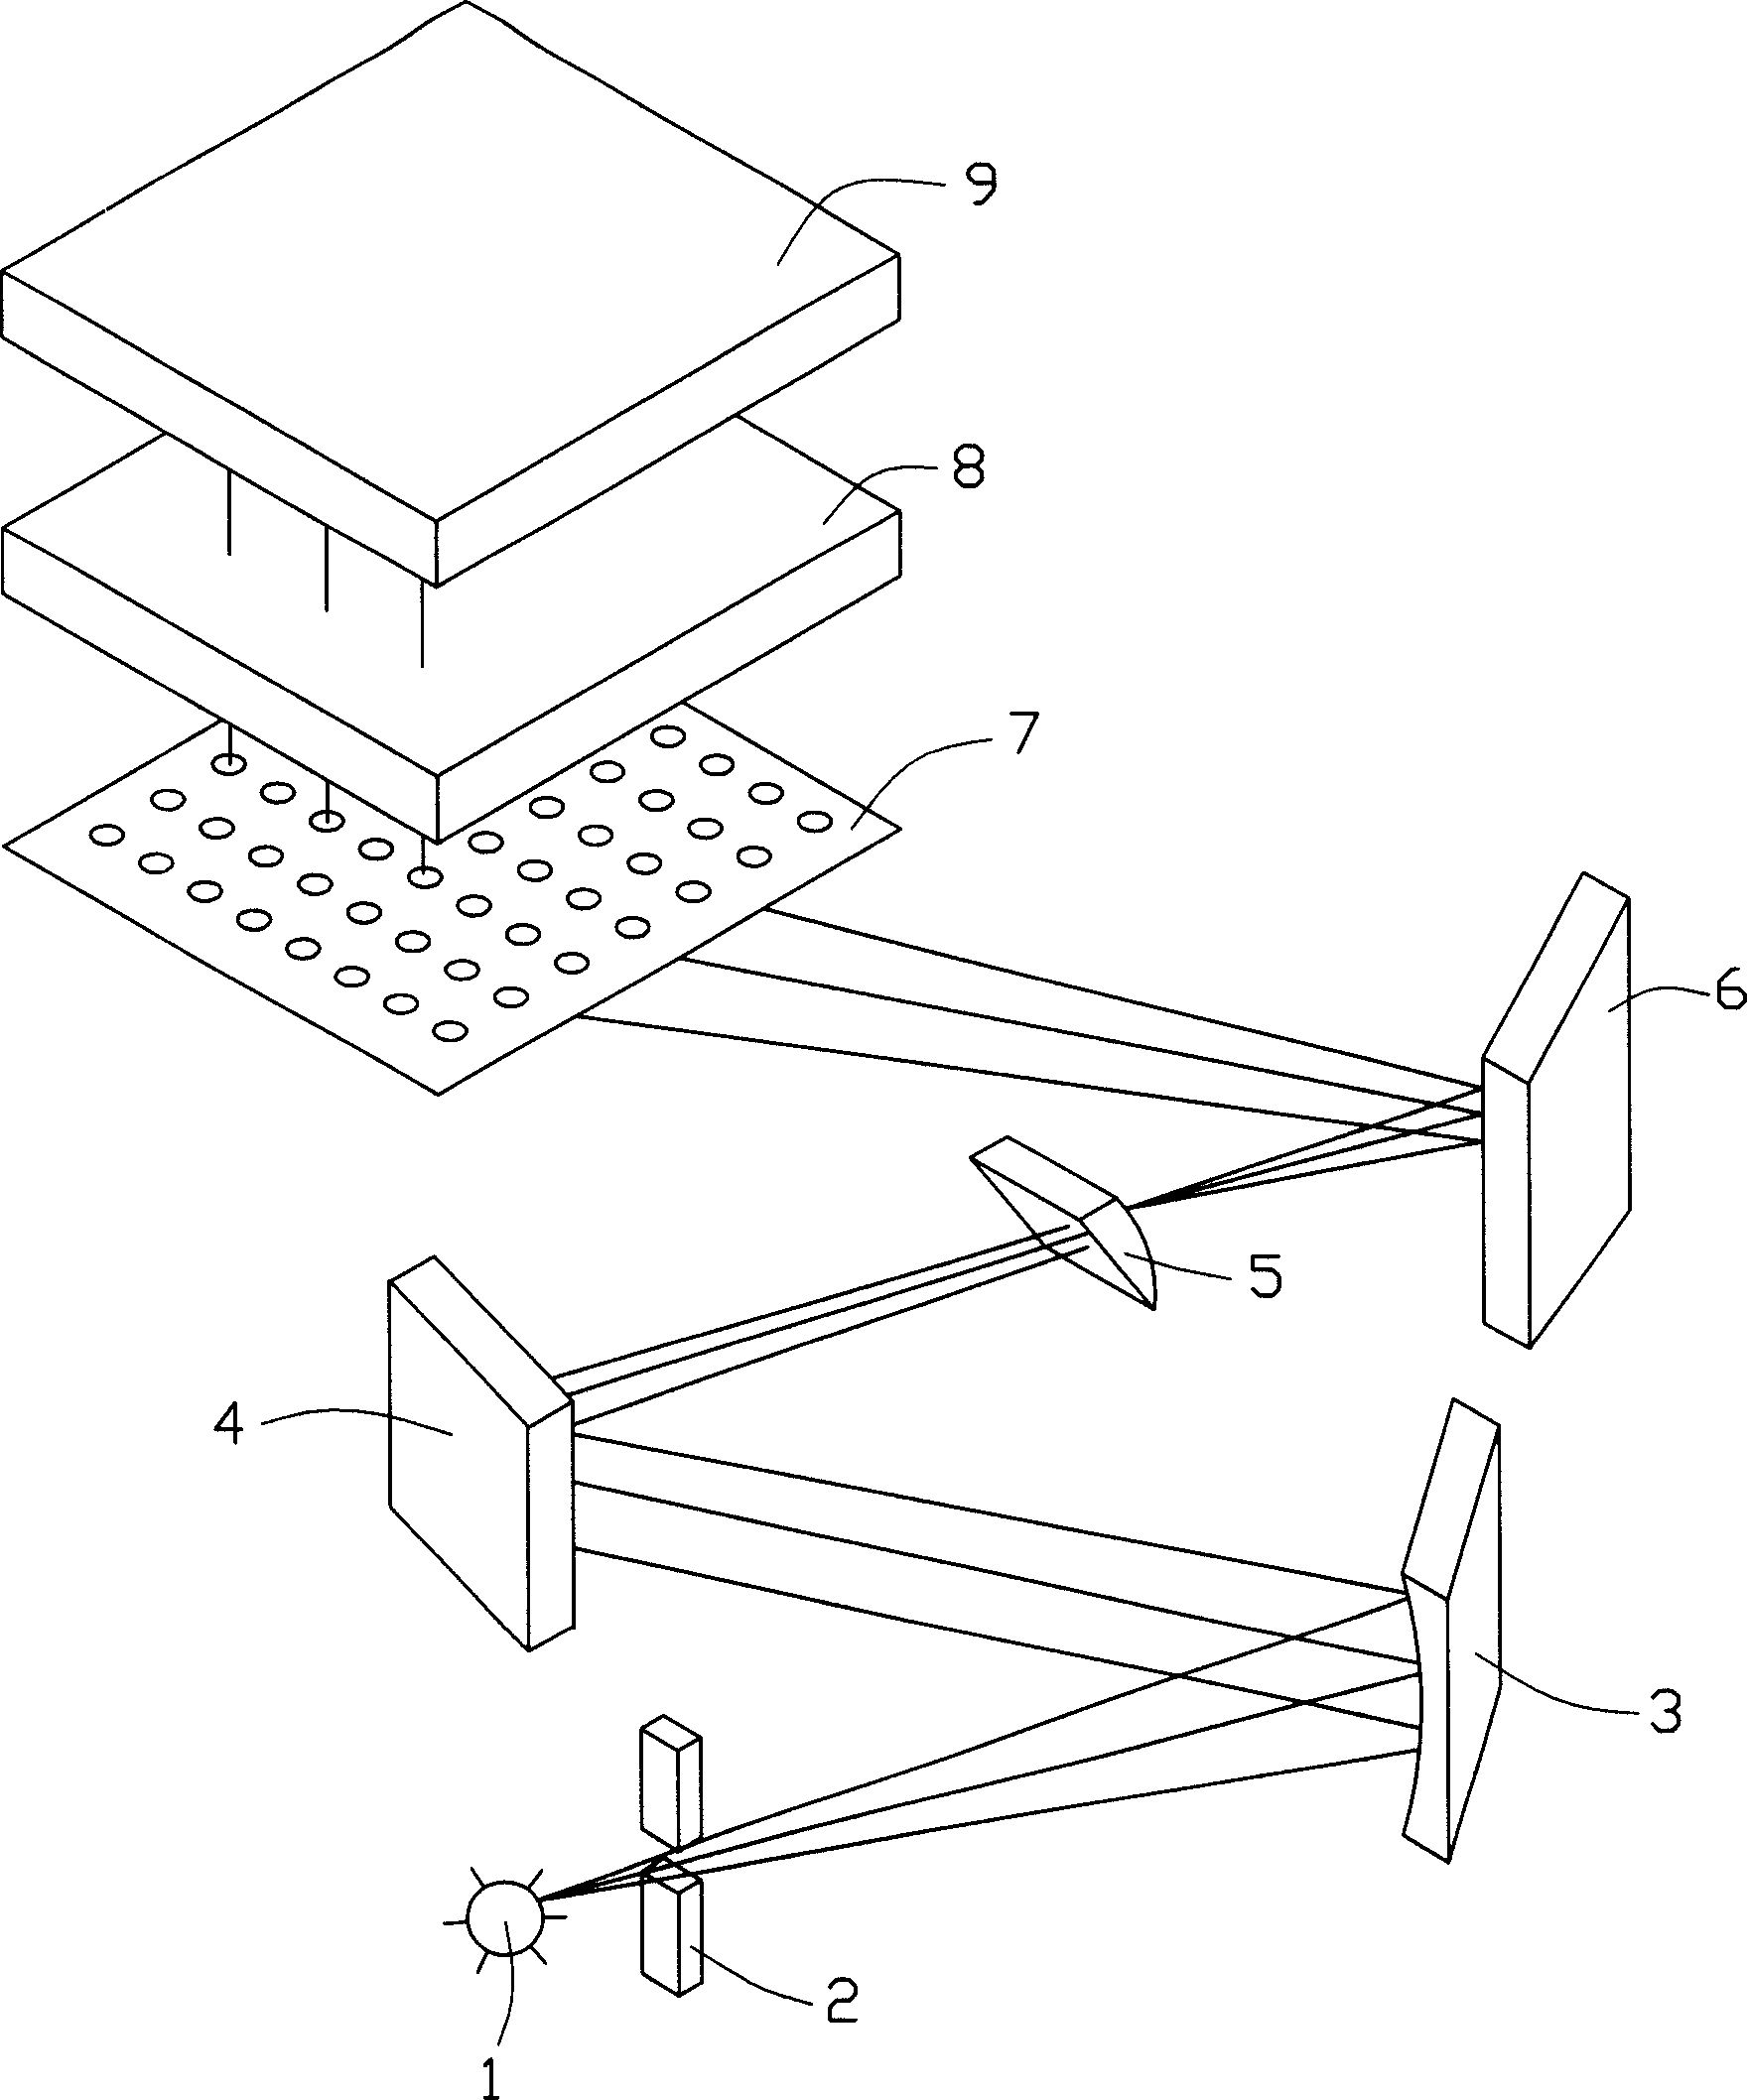 Optical grating spectrometer